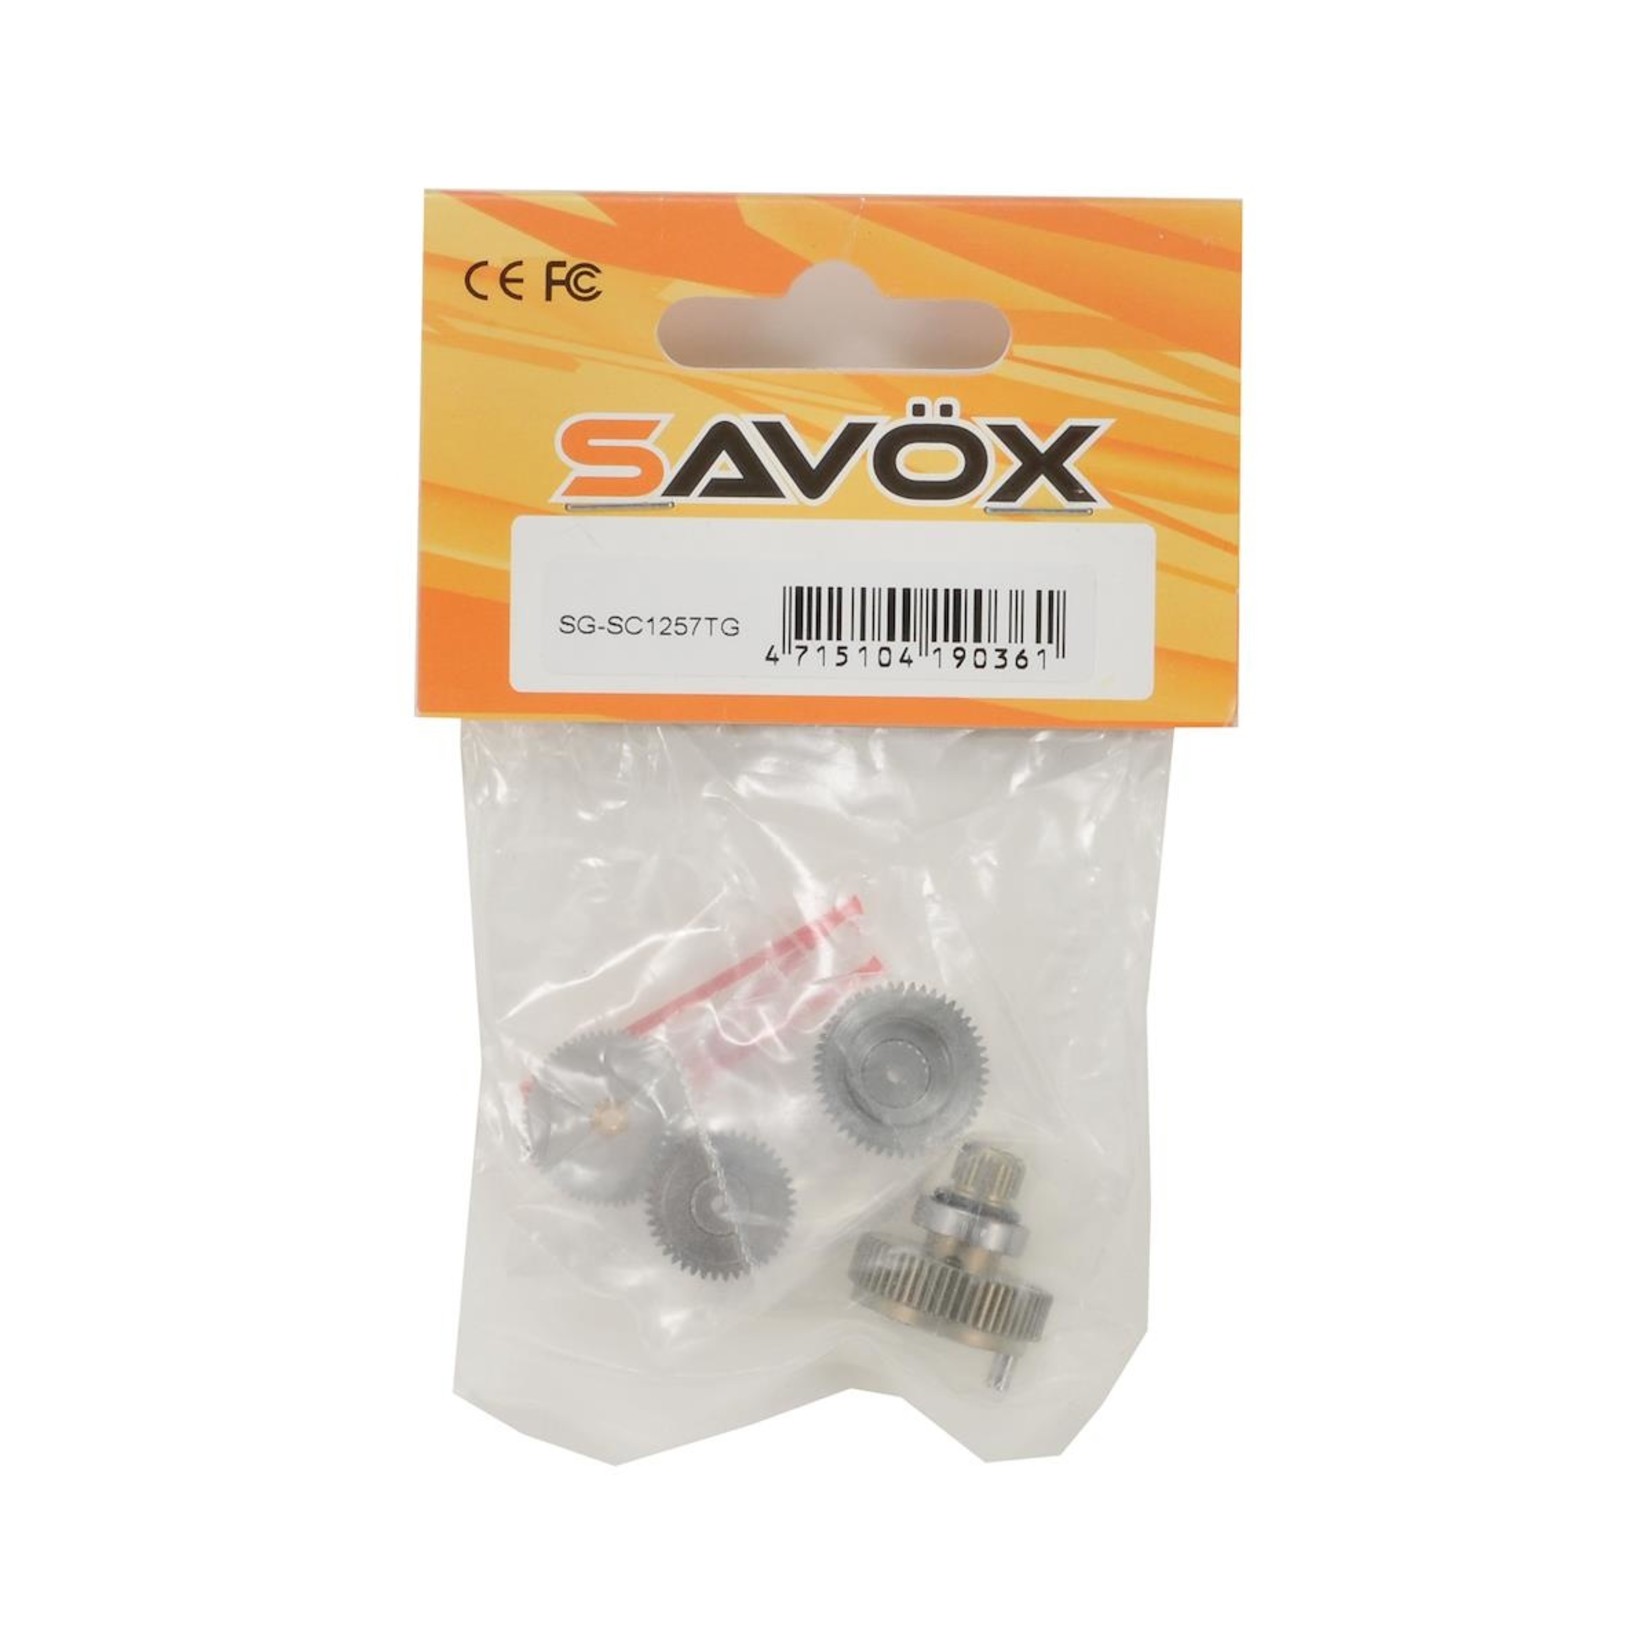 Savox Savox Titanium Gear Set w/Bearing #SG-SC1257TG